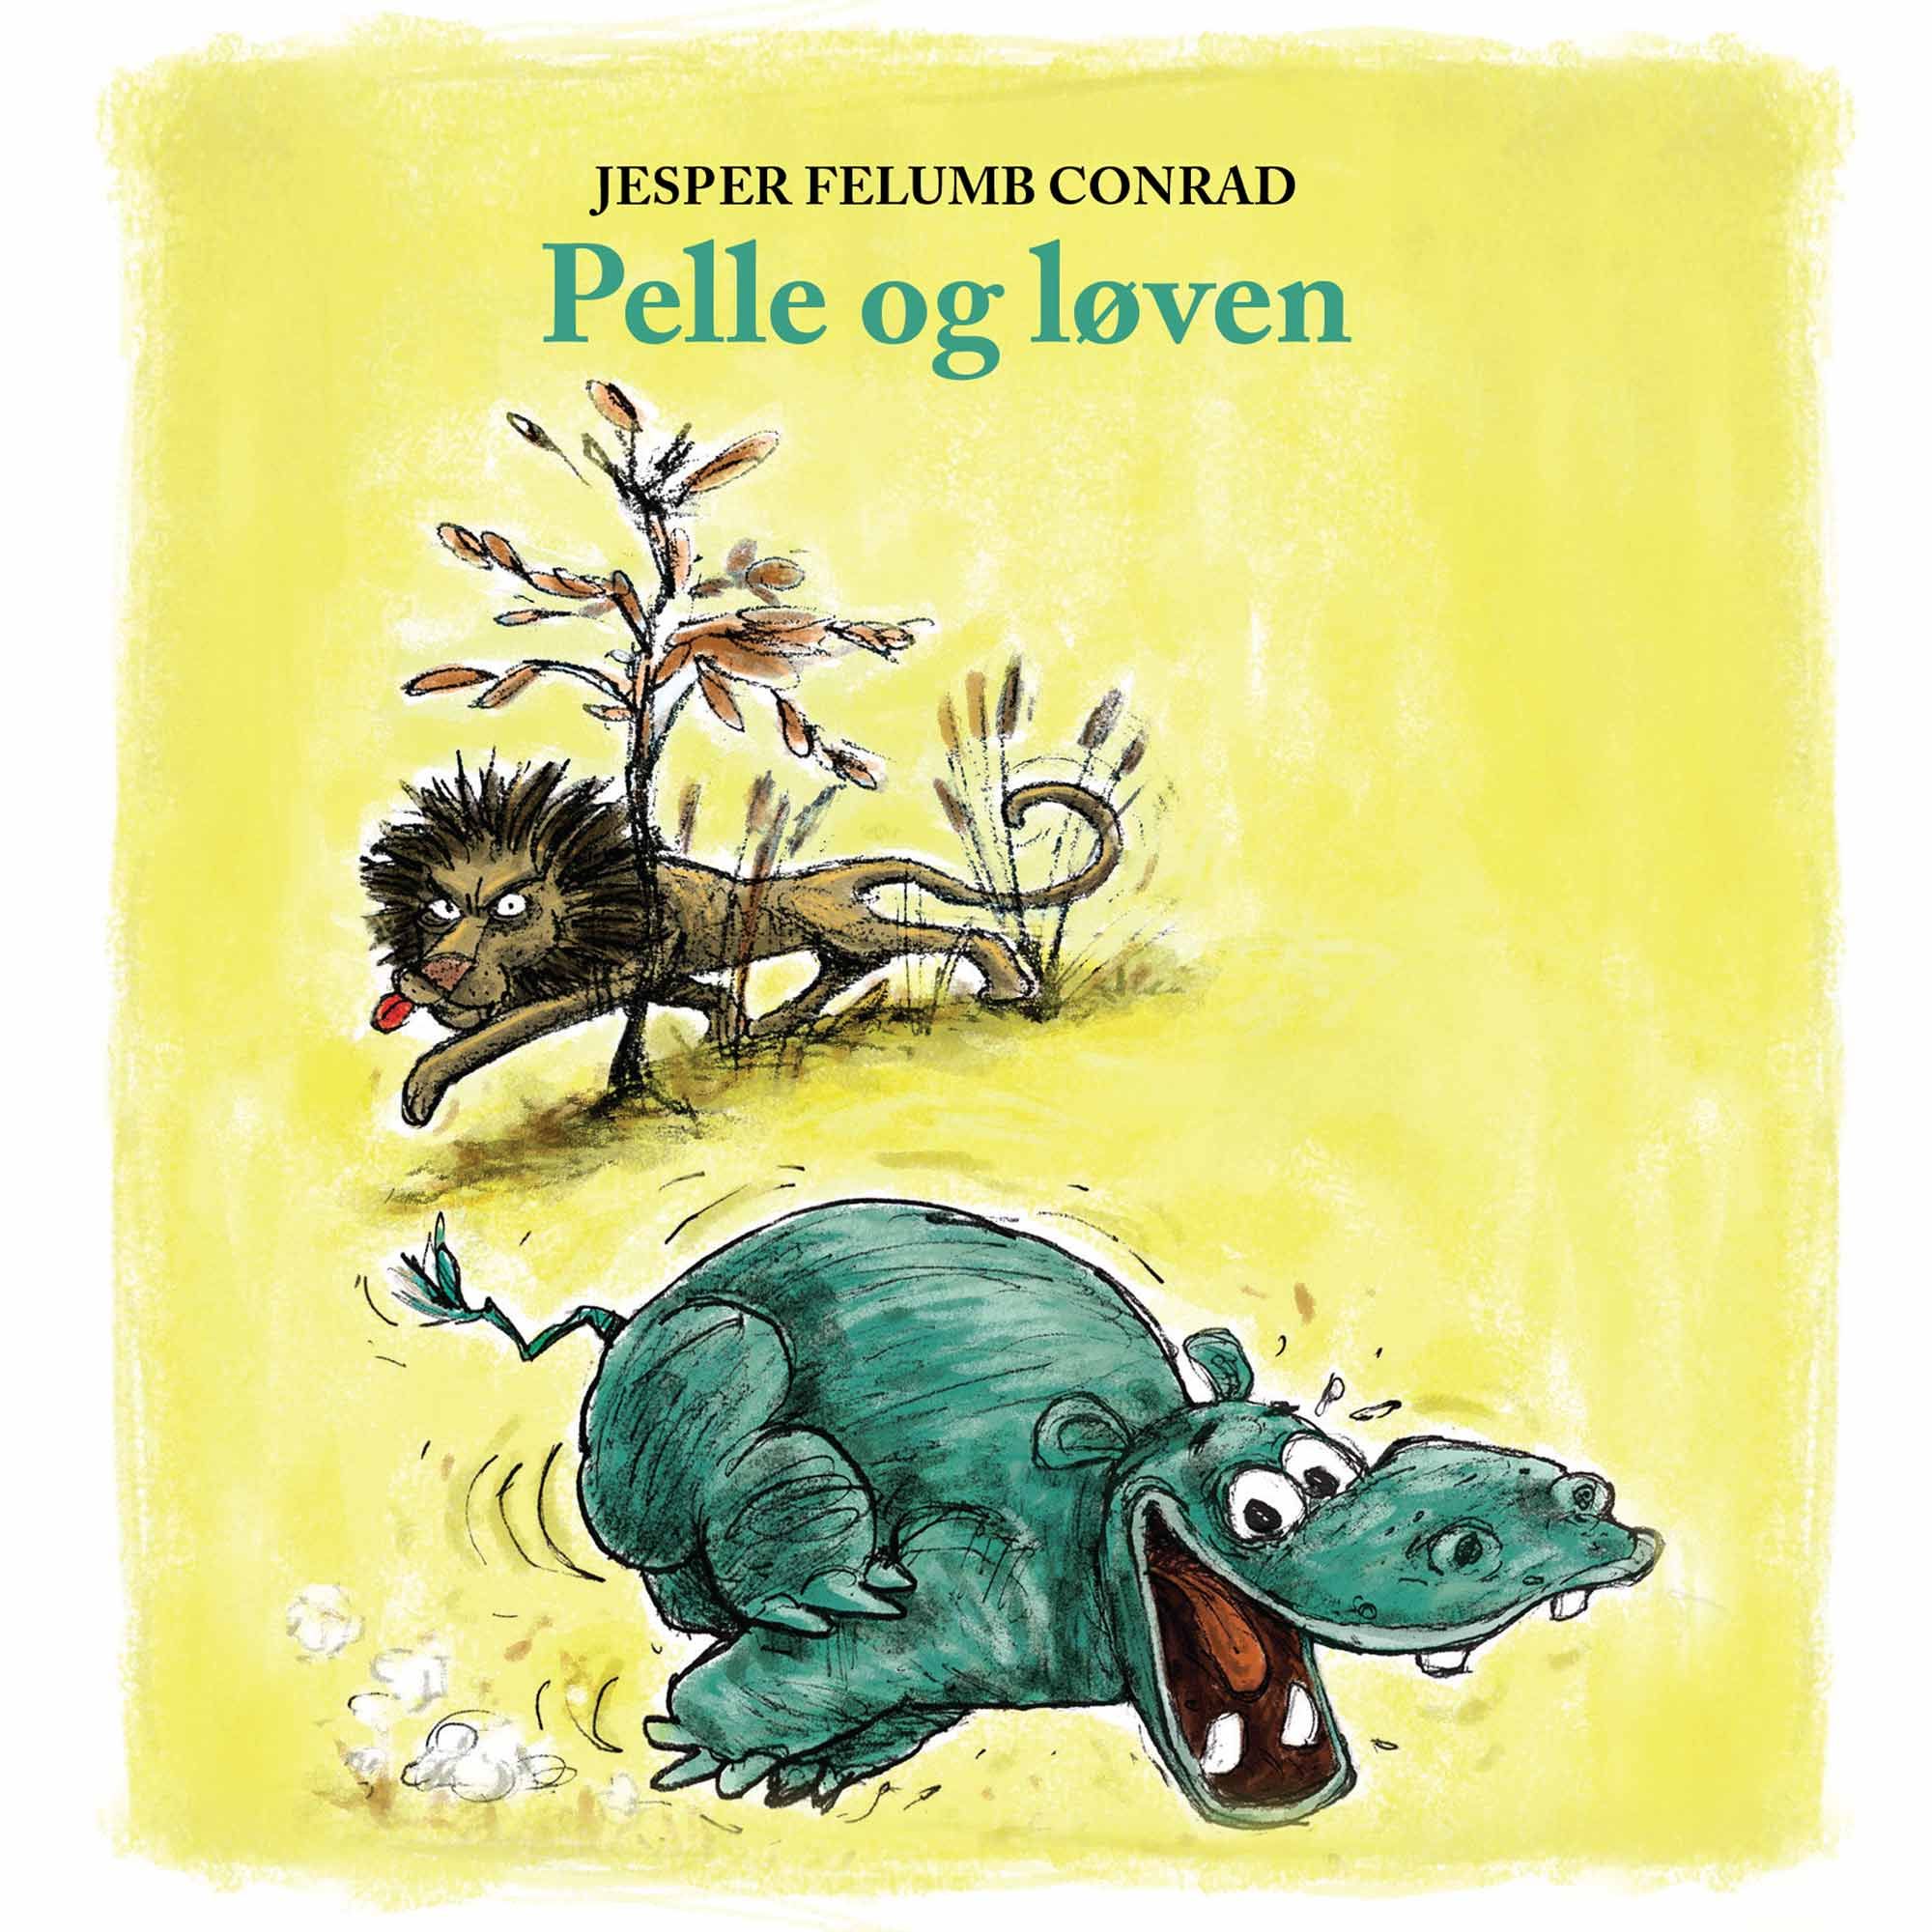 Pelle og løven, ljudbok av Jesper Felumb Conrad